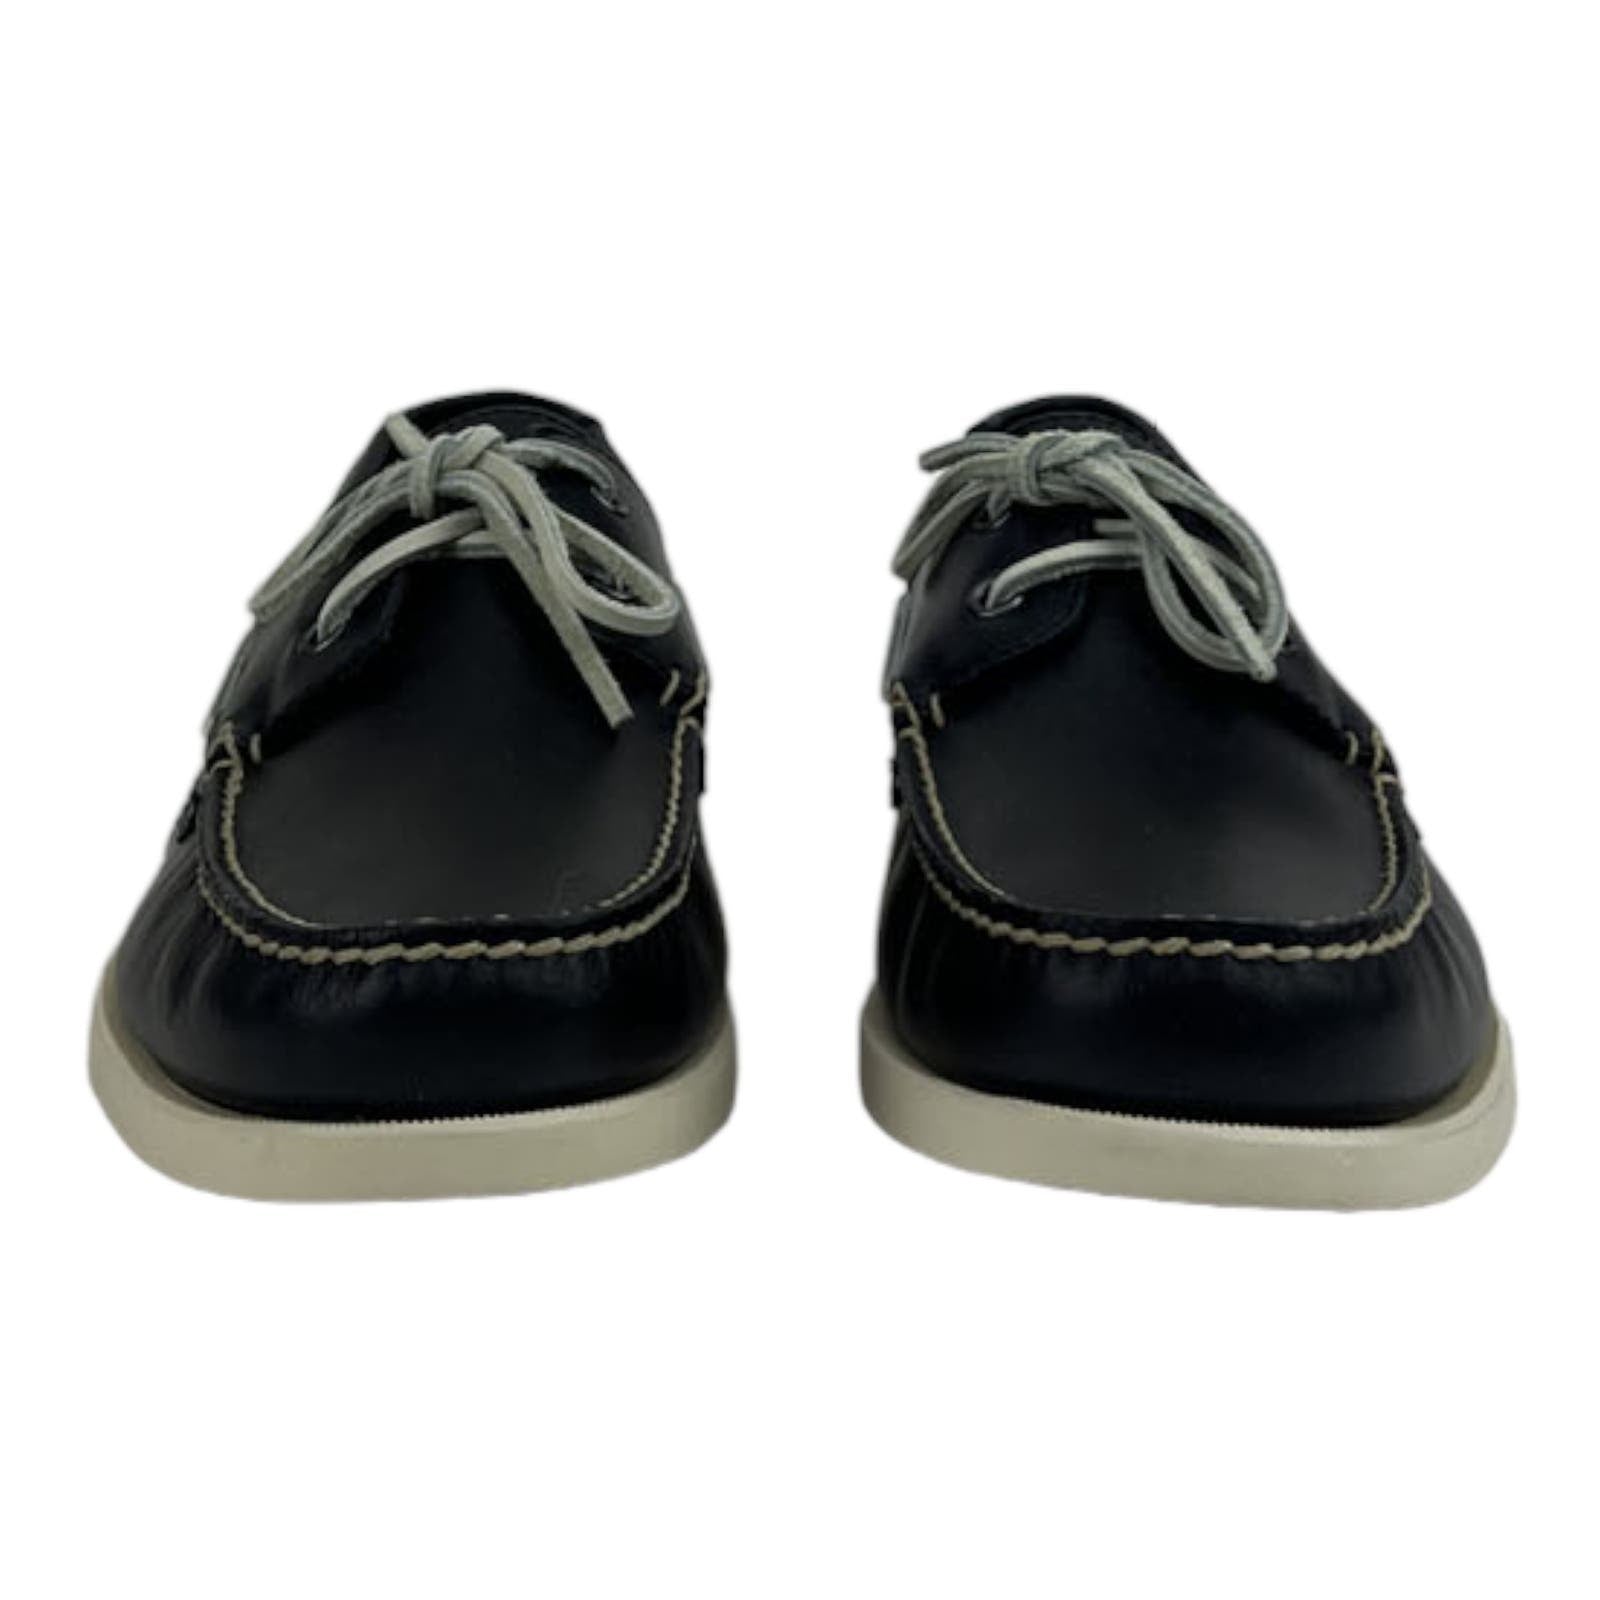 EASTLAND SEAPORT Men US 10.5 Moc Toe Navy Lace-up Leather Boat Shoes